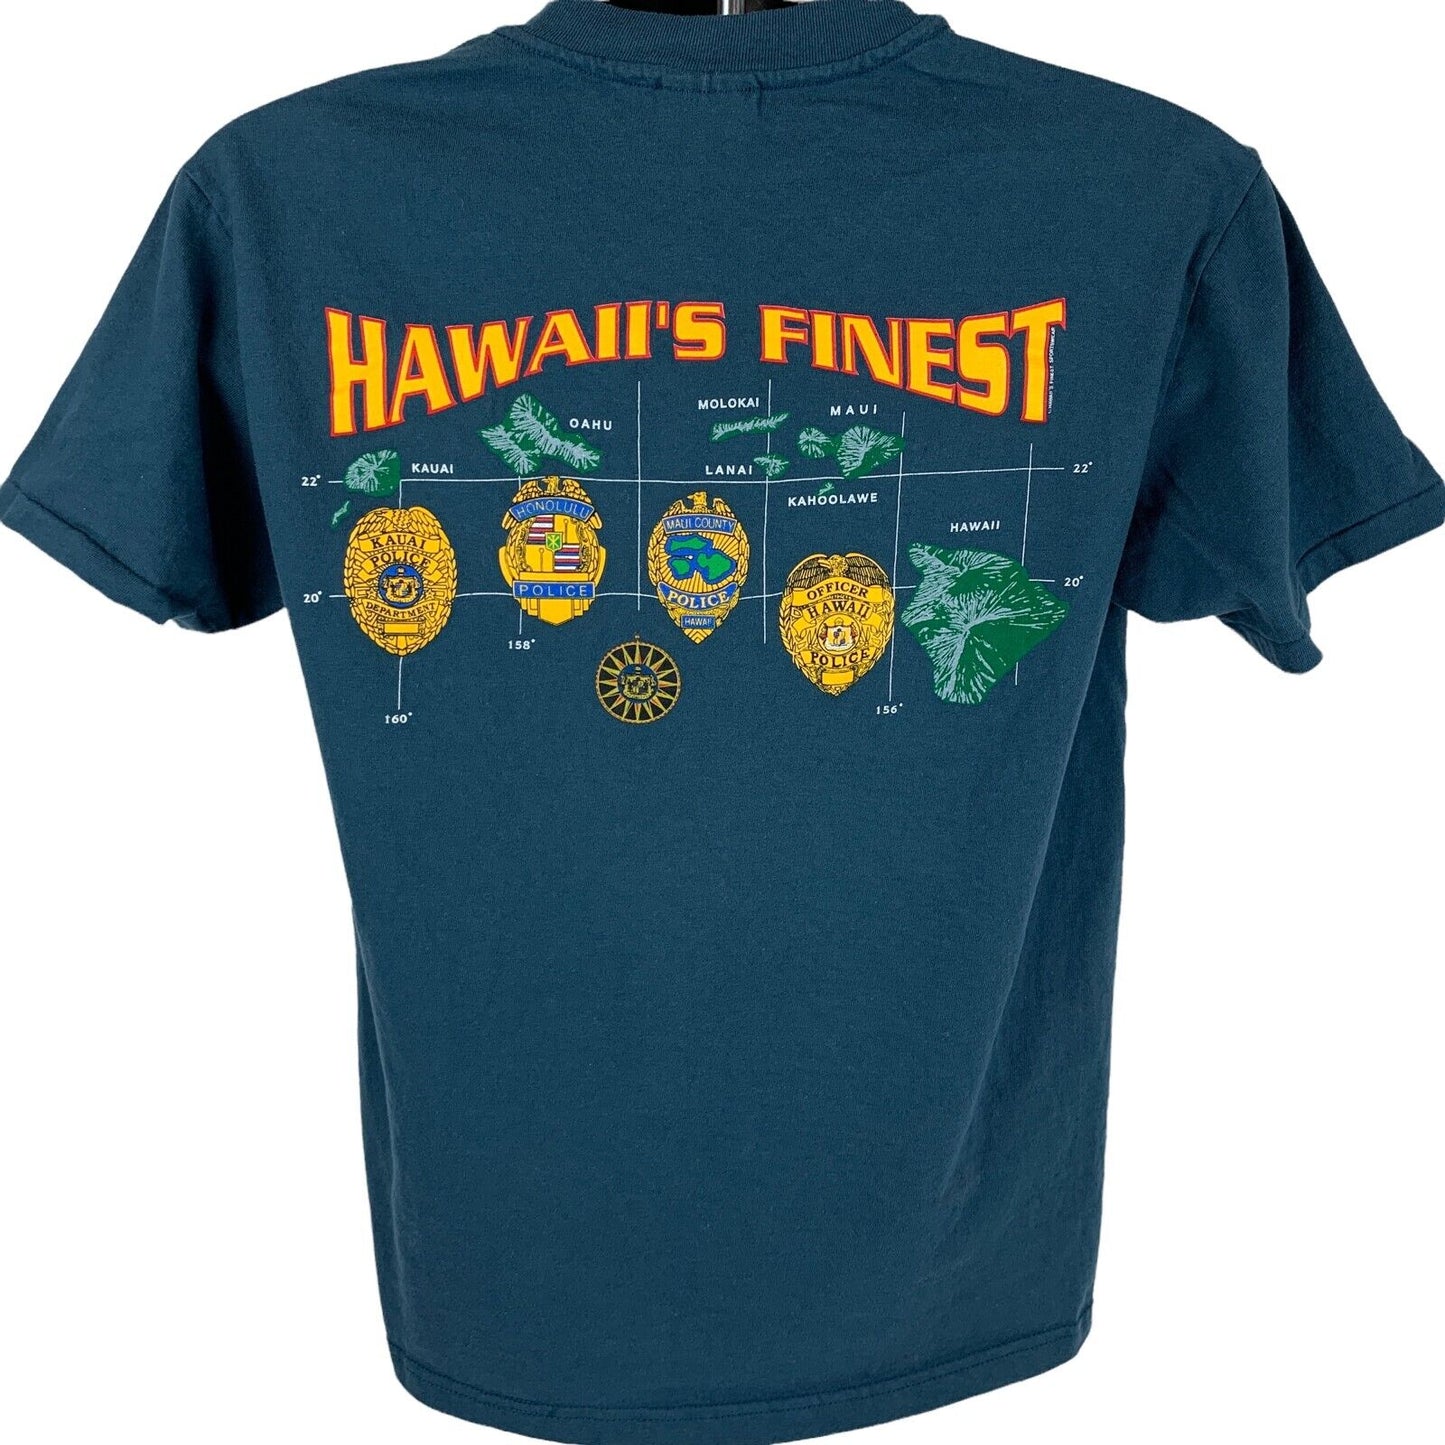 Vintage 90s Hawaii's Finest Police T Shirt Five-0 Cops Officers Badges Medium